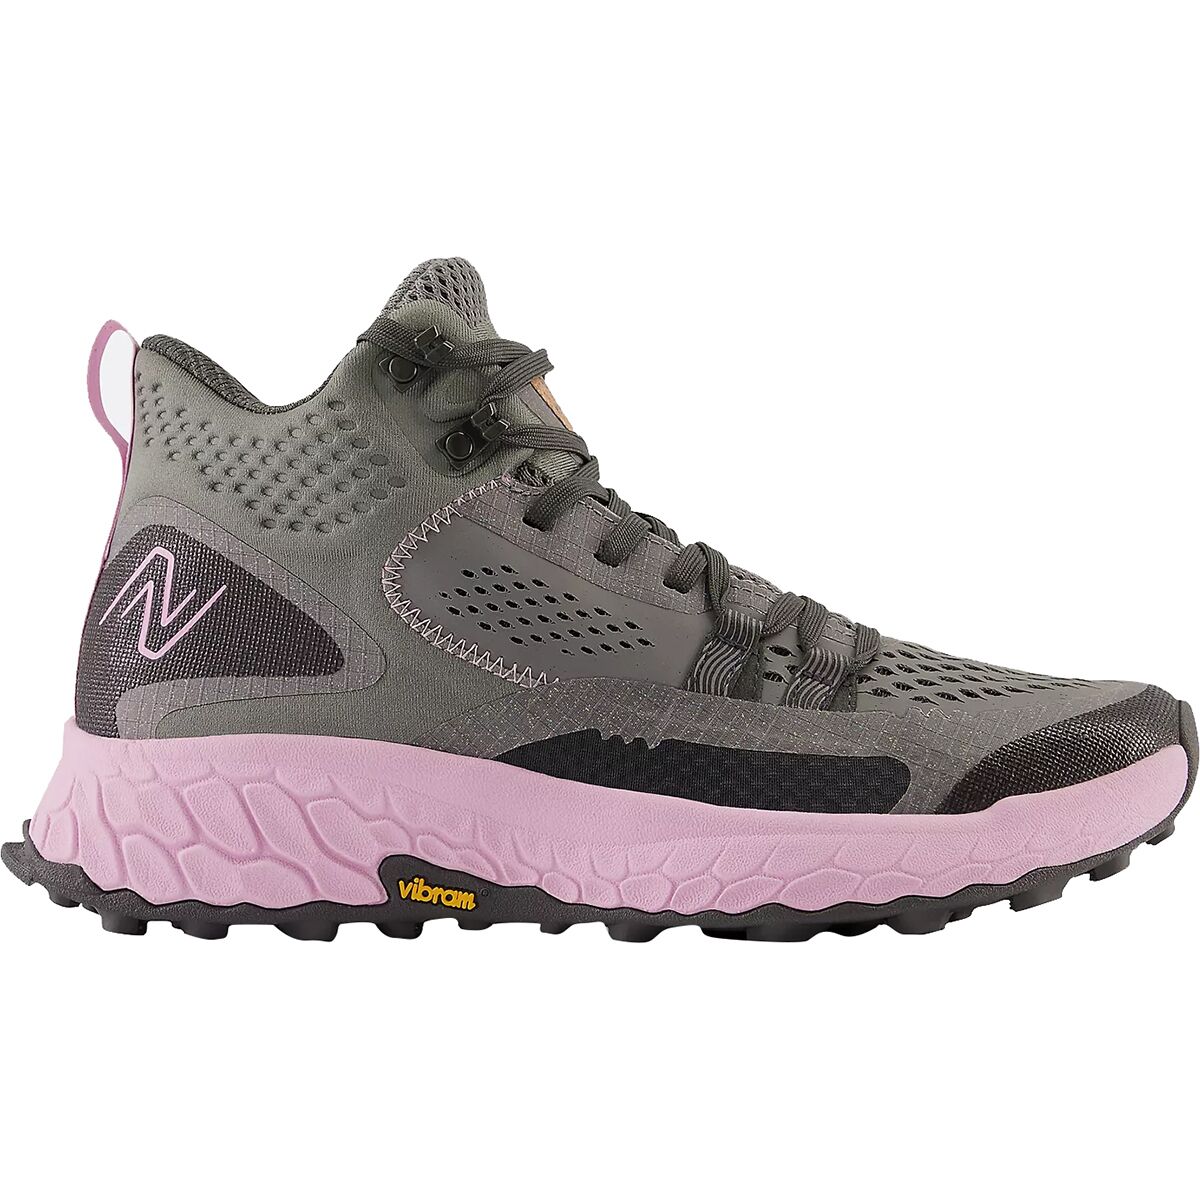 New Balance Fresh Foam X Hierro Mid Trail Running Shoe - Women's